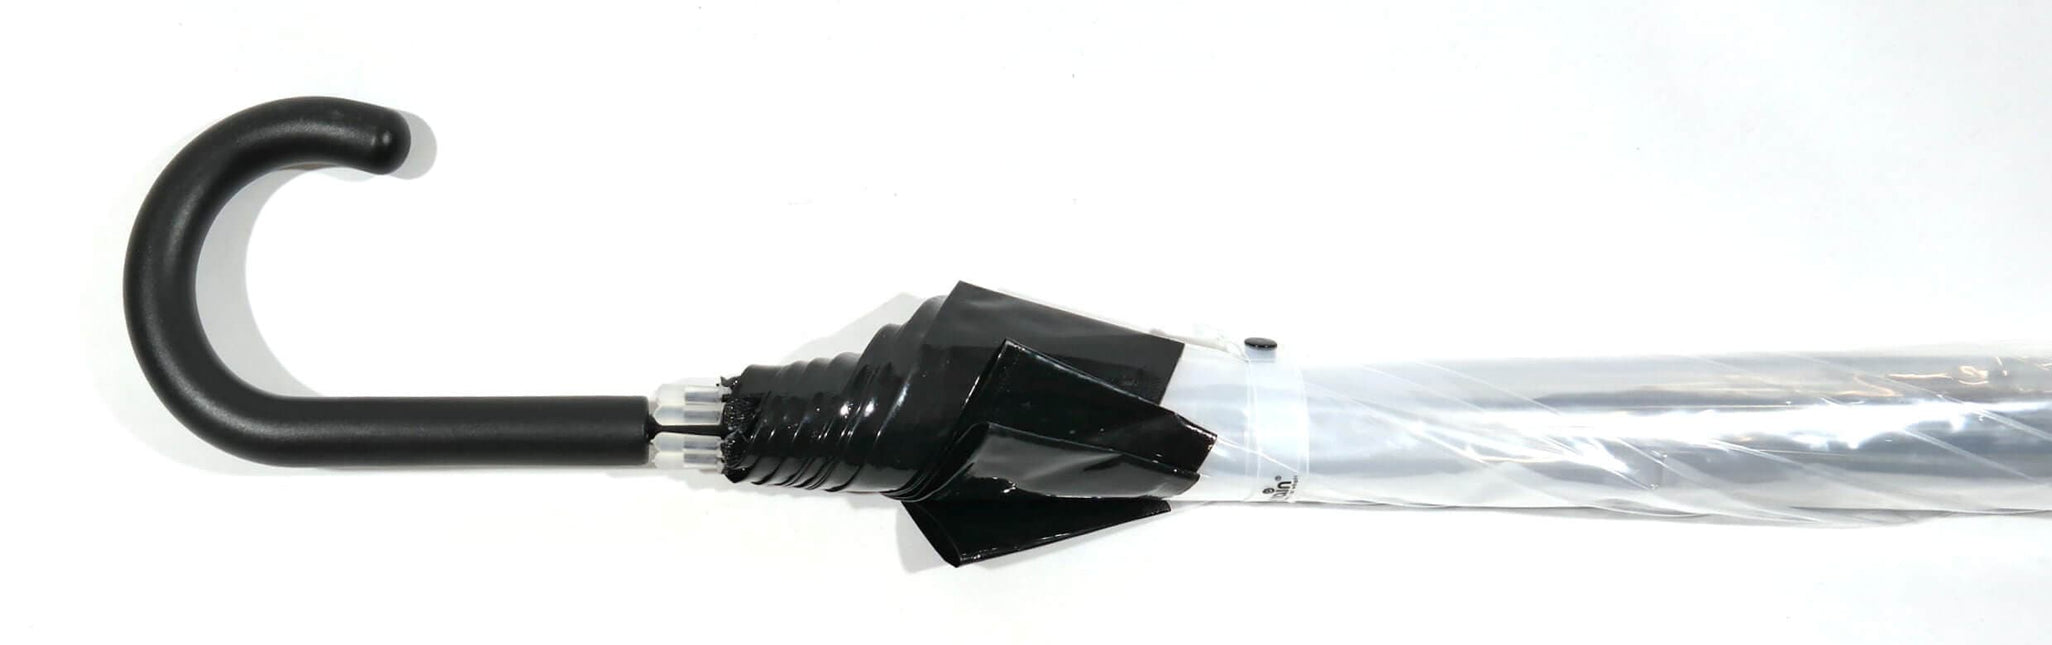 Transparent manual umbrella with live black